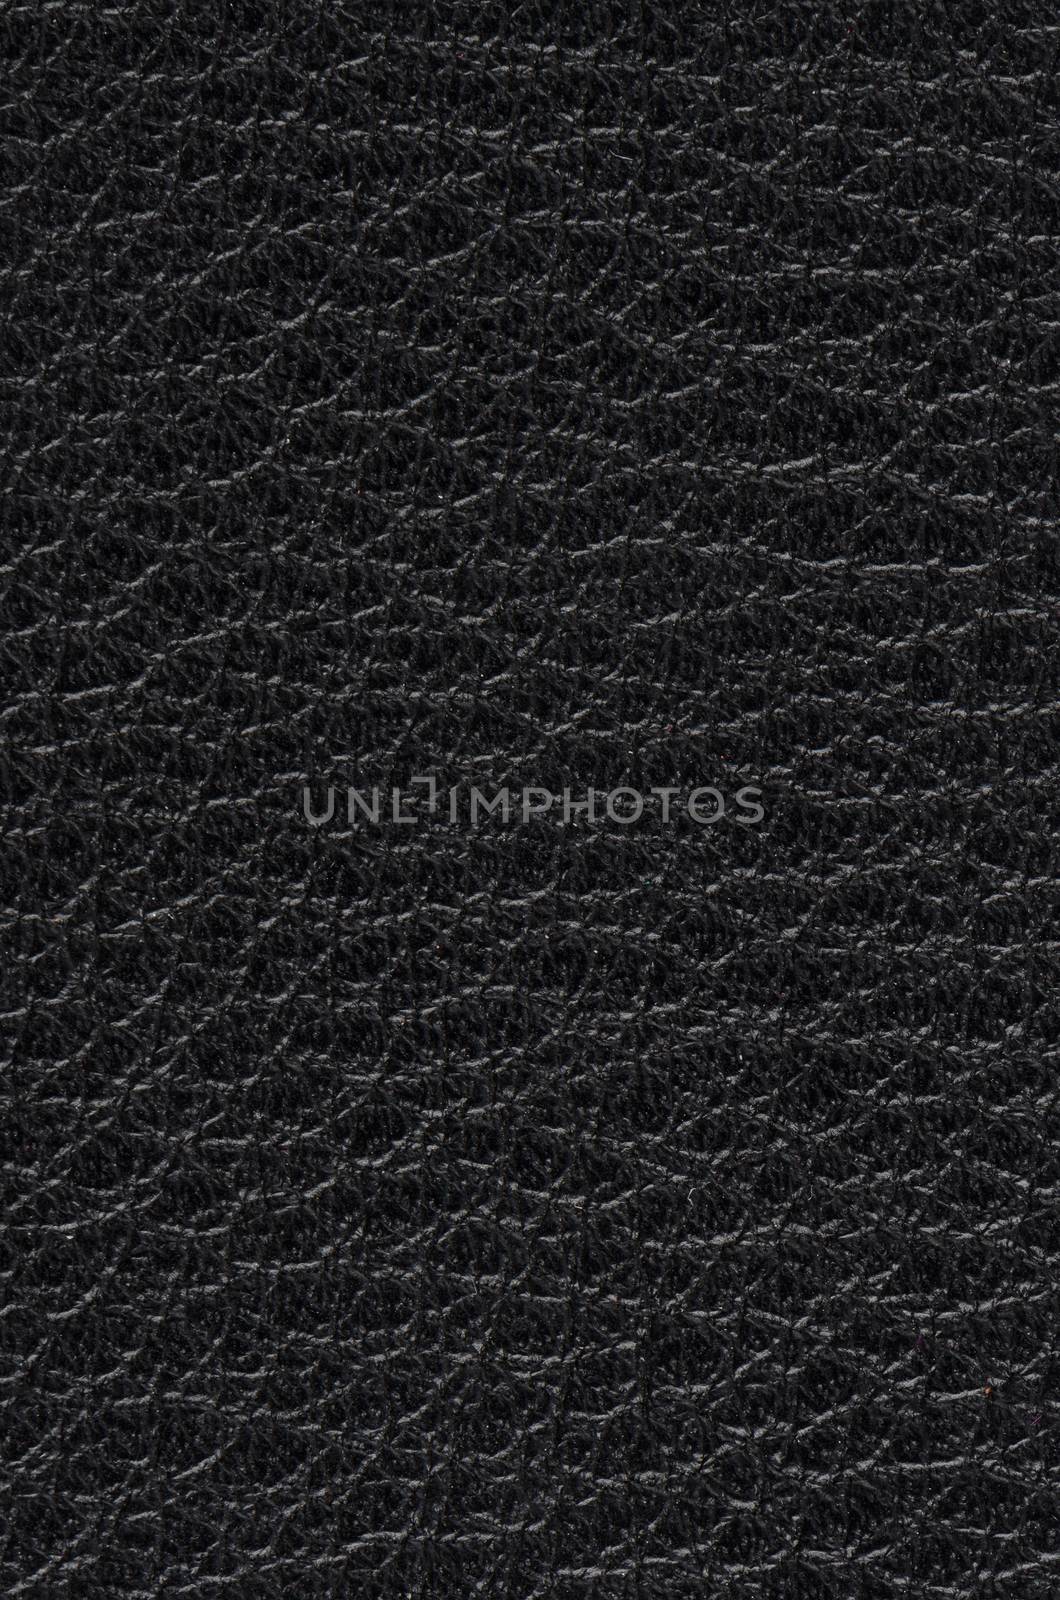 Natural qualitative black leather texture. Close up.